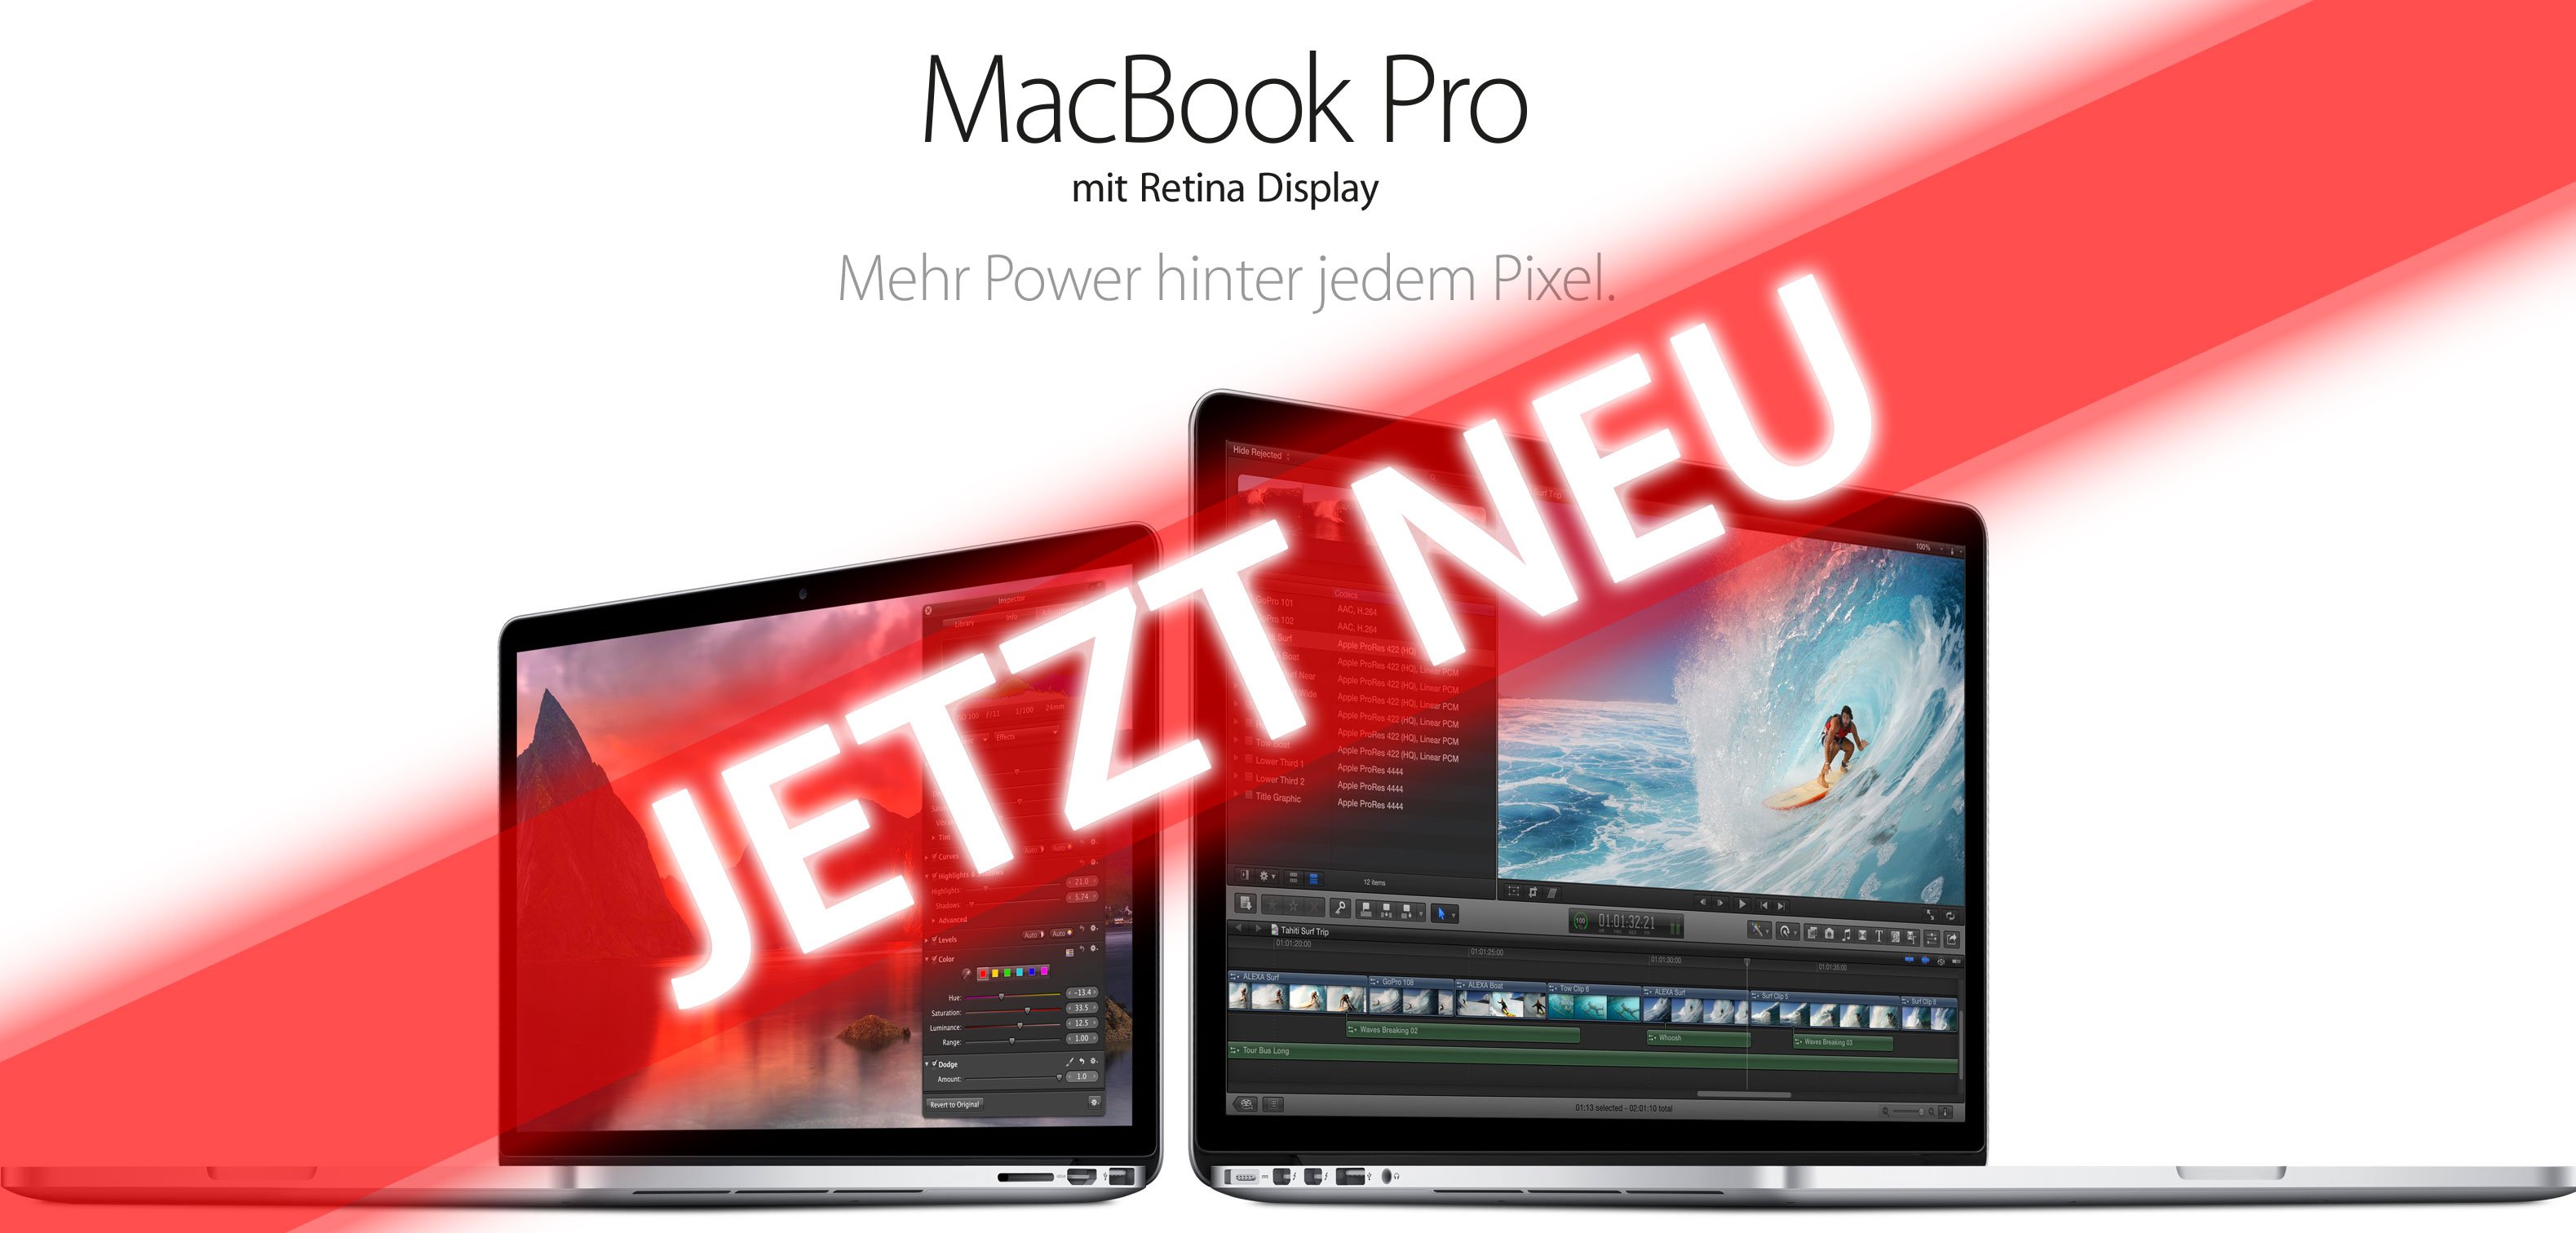 MacBook Pro 2014 mit Retina Display jetzt im Apple Online Store 1